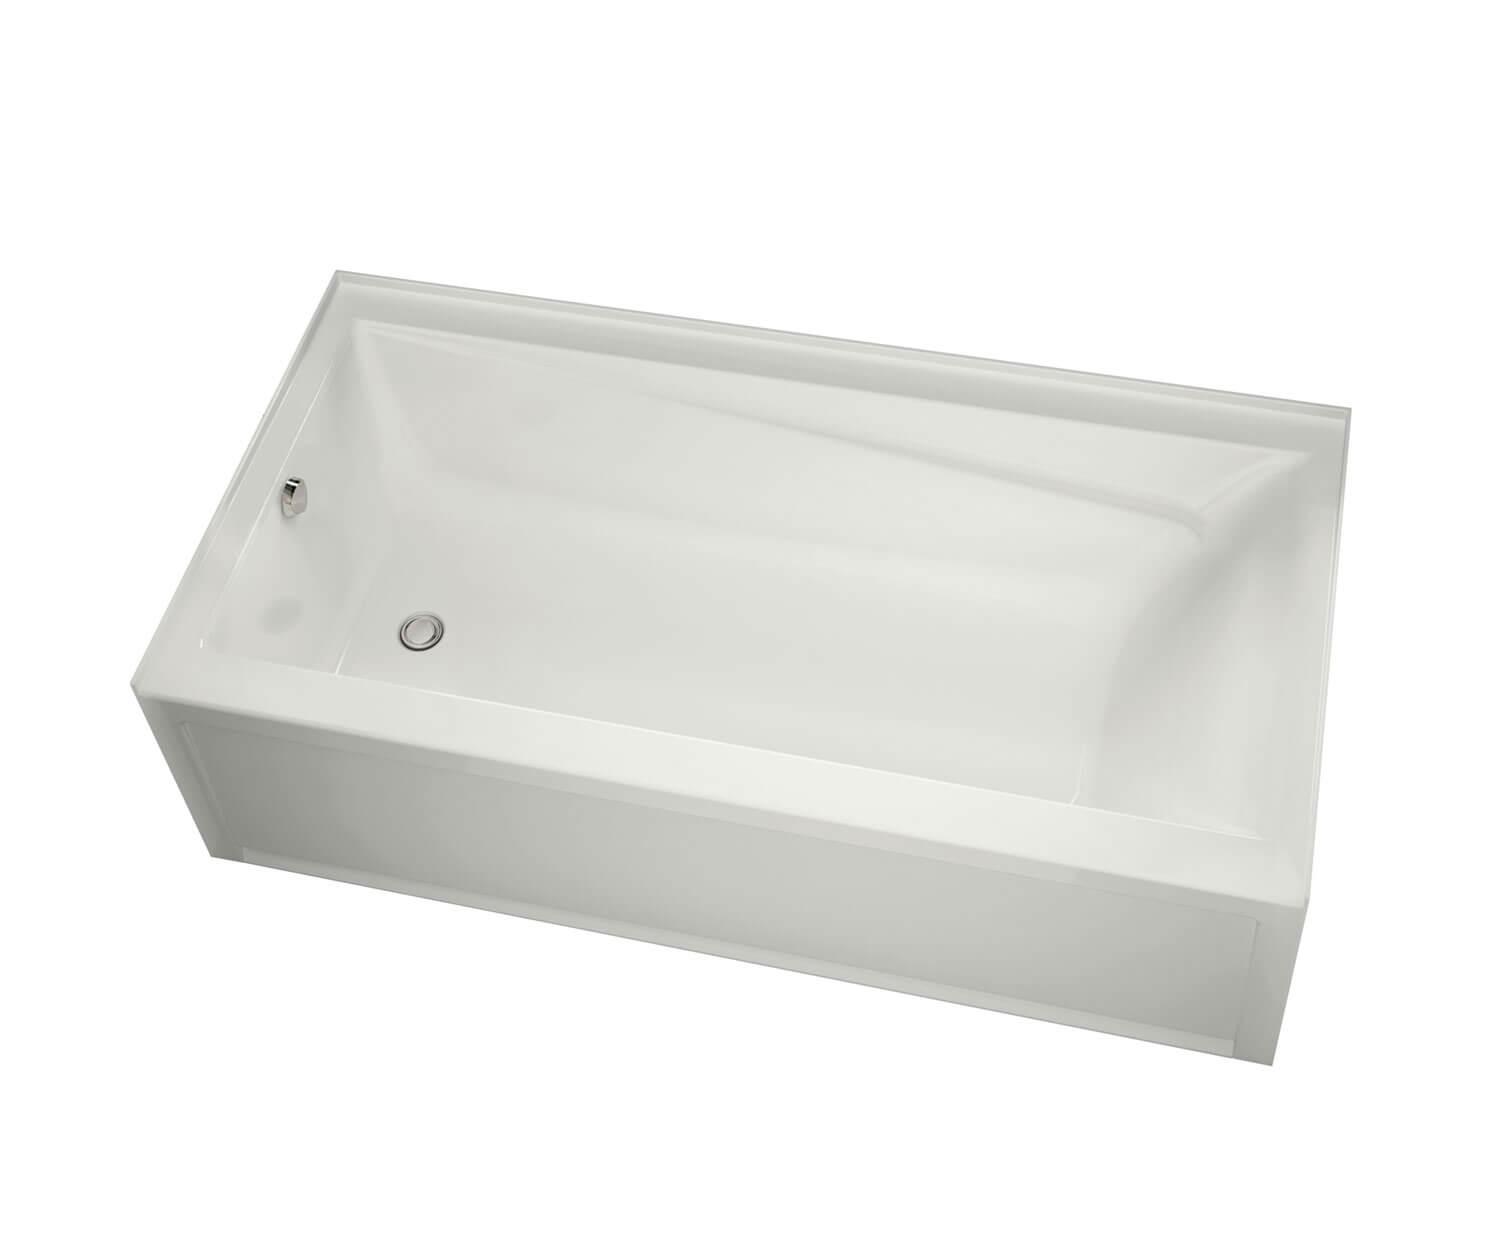 Maax Exhibit IFS AFR Acrylic Alcove Left-Hand Drain Bathtub in White 60 x 32 105512 - Hbdepot